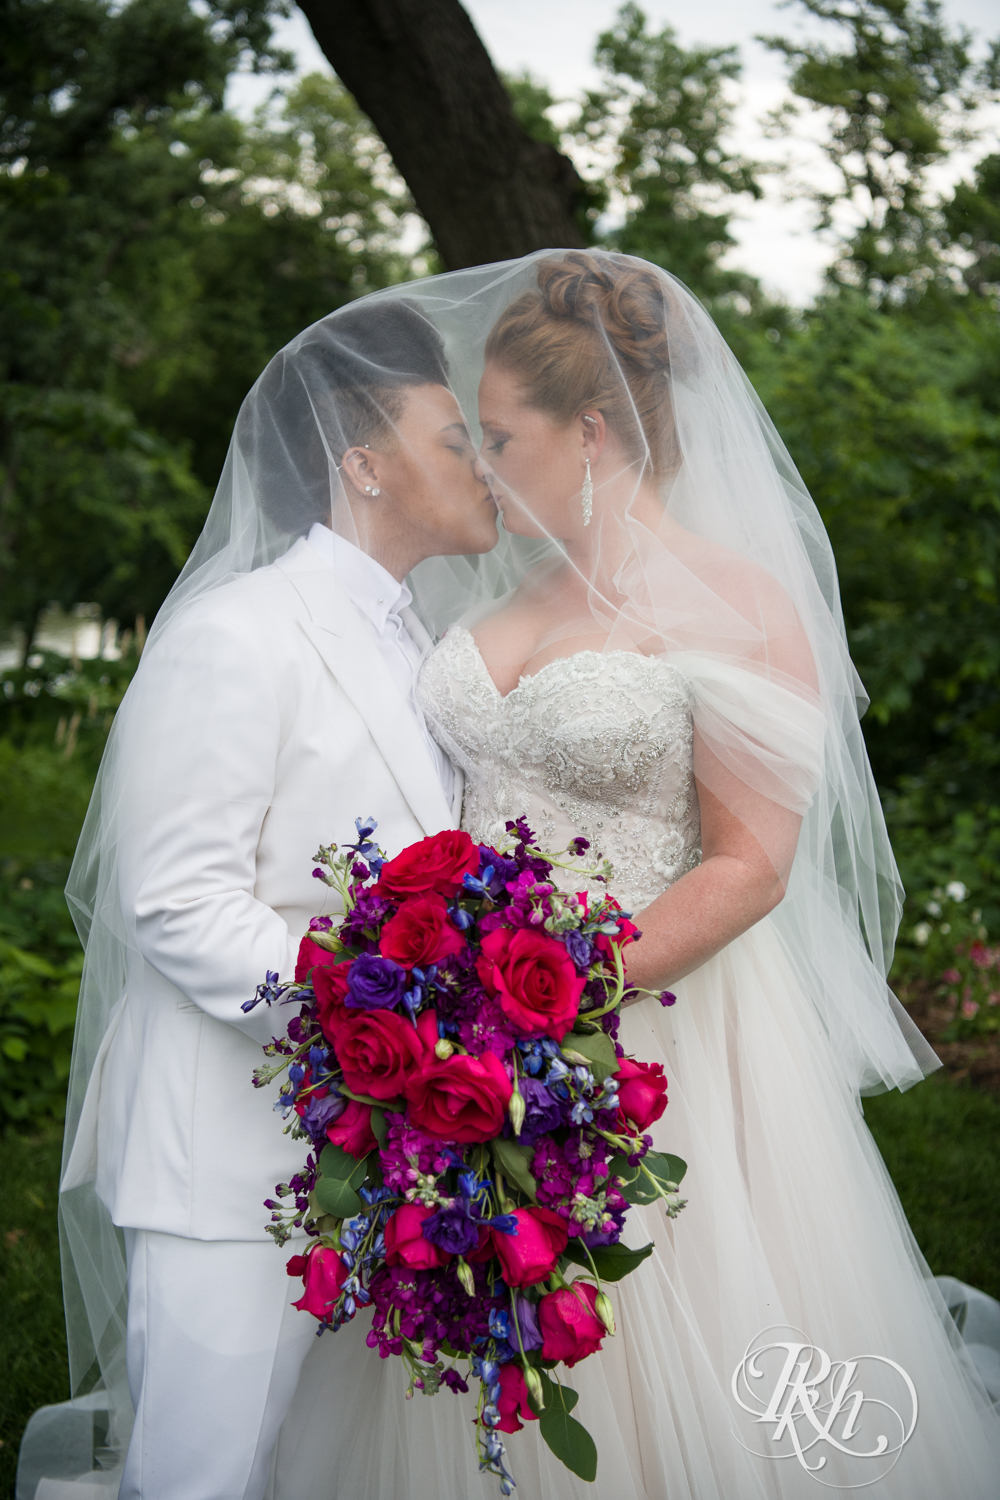 Black lesbian bride and white bride kiss under veil at Leopold's Mississippi Gardens in Brooklyn Park, Minnesota.